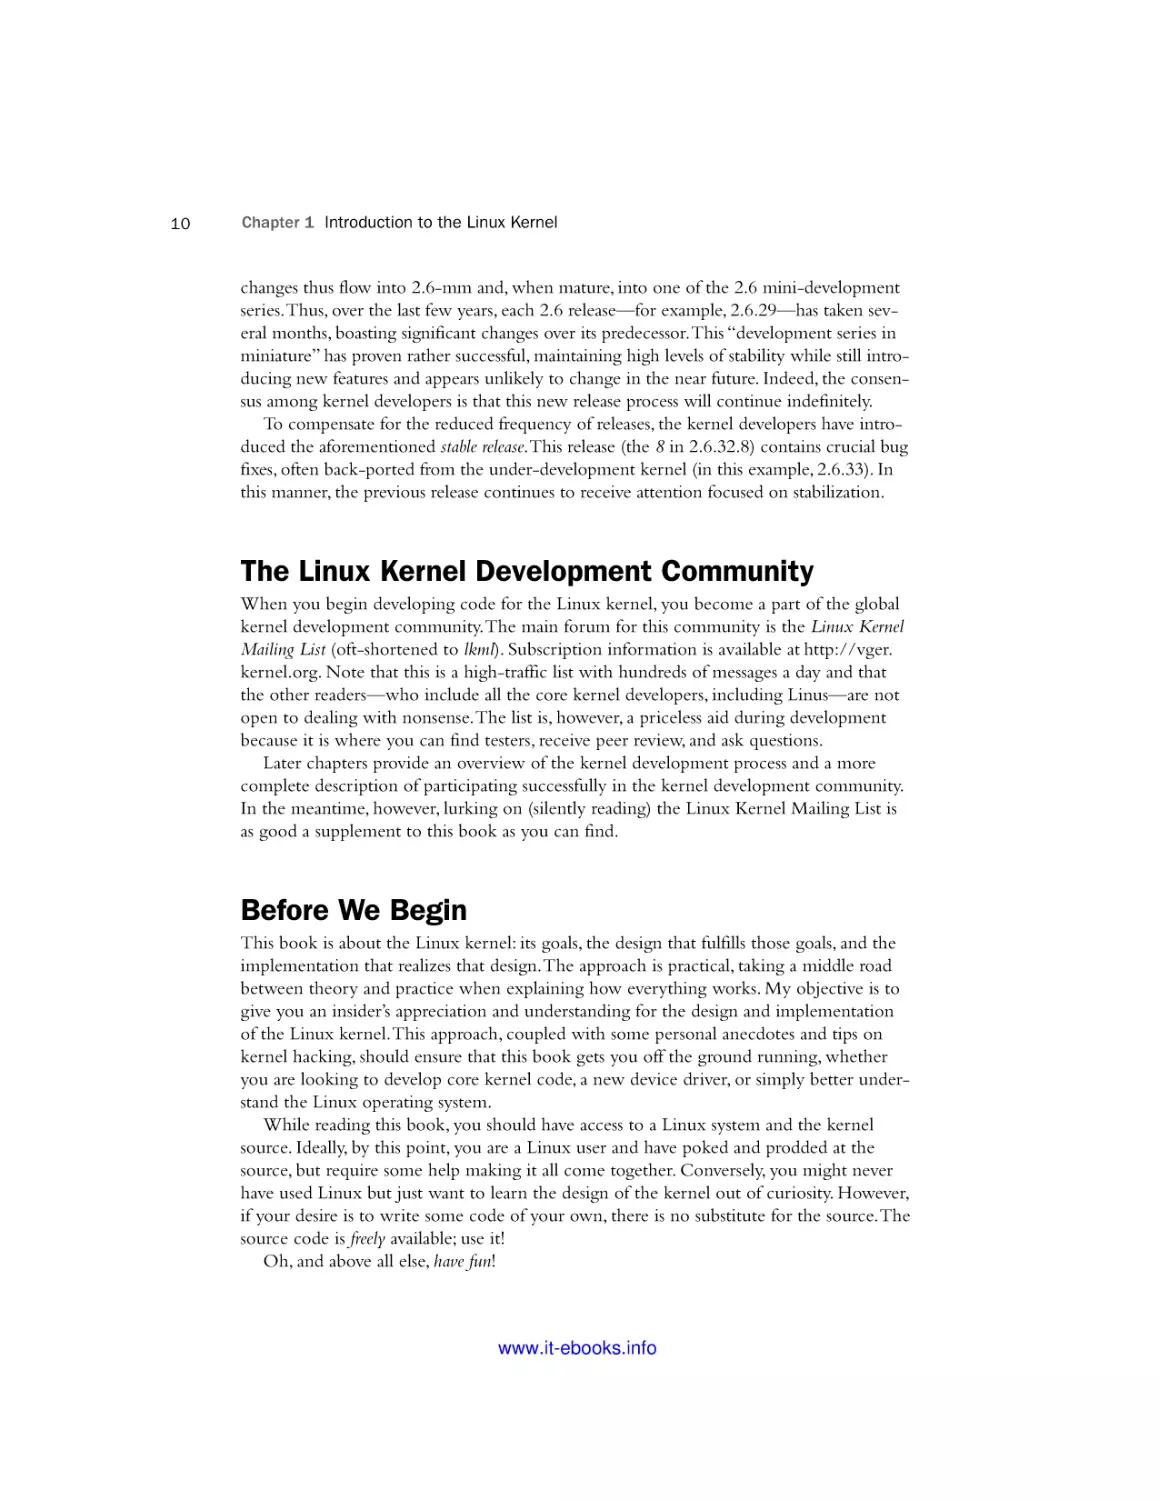 The Linux Kernel Development Community
Before We Begin